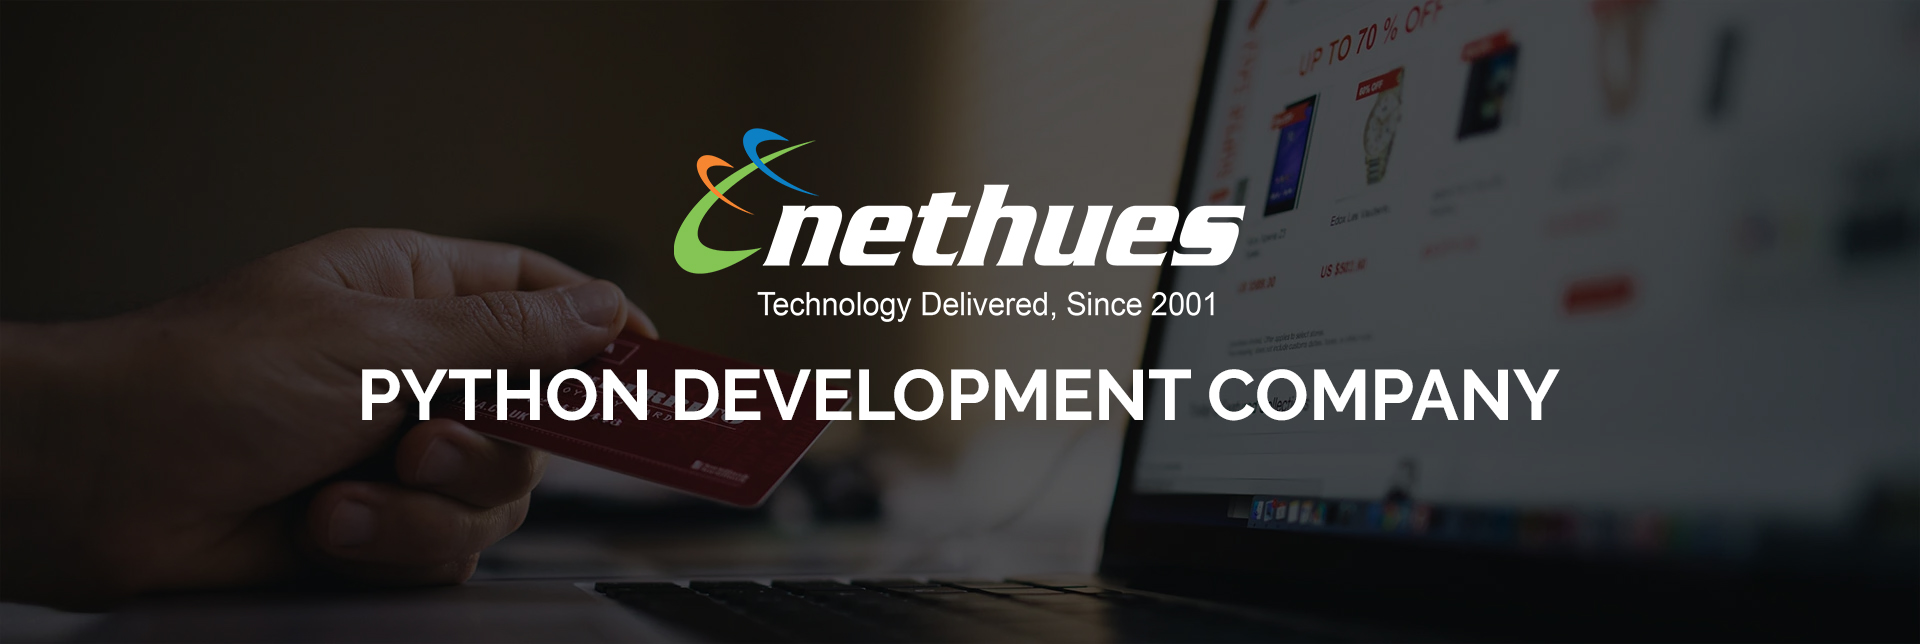 Top Python Development Company | Hire Expert Python Developers - Nethues